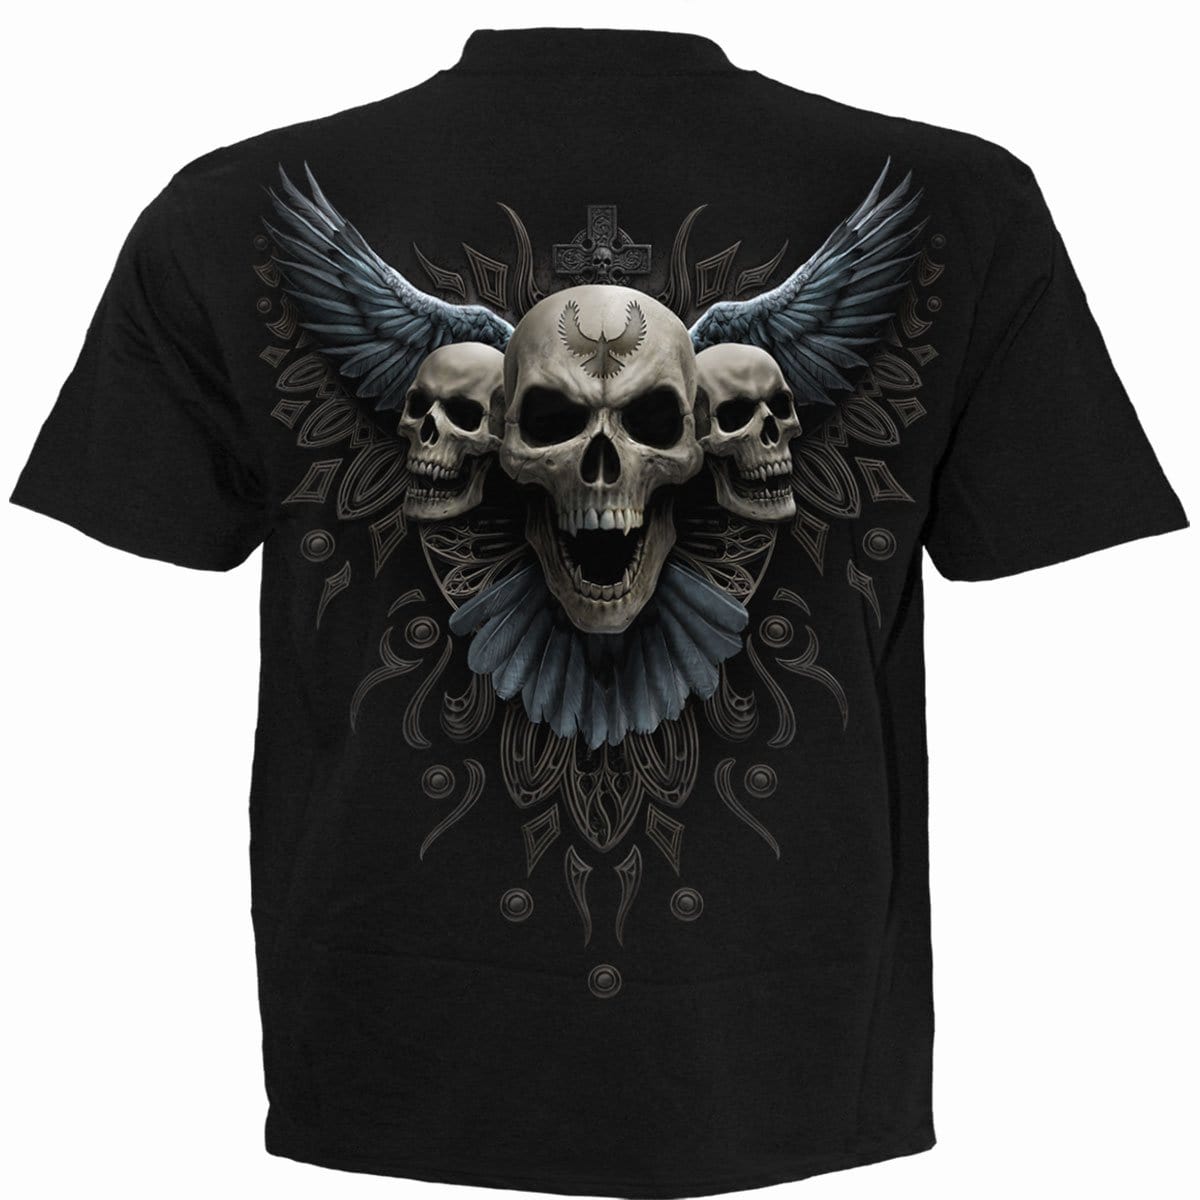 RAVEN SKULL - T-Shirt Black - Spiral USA